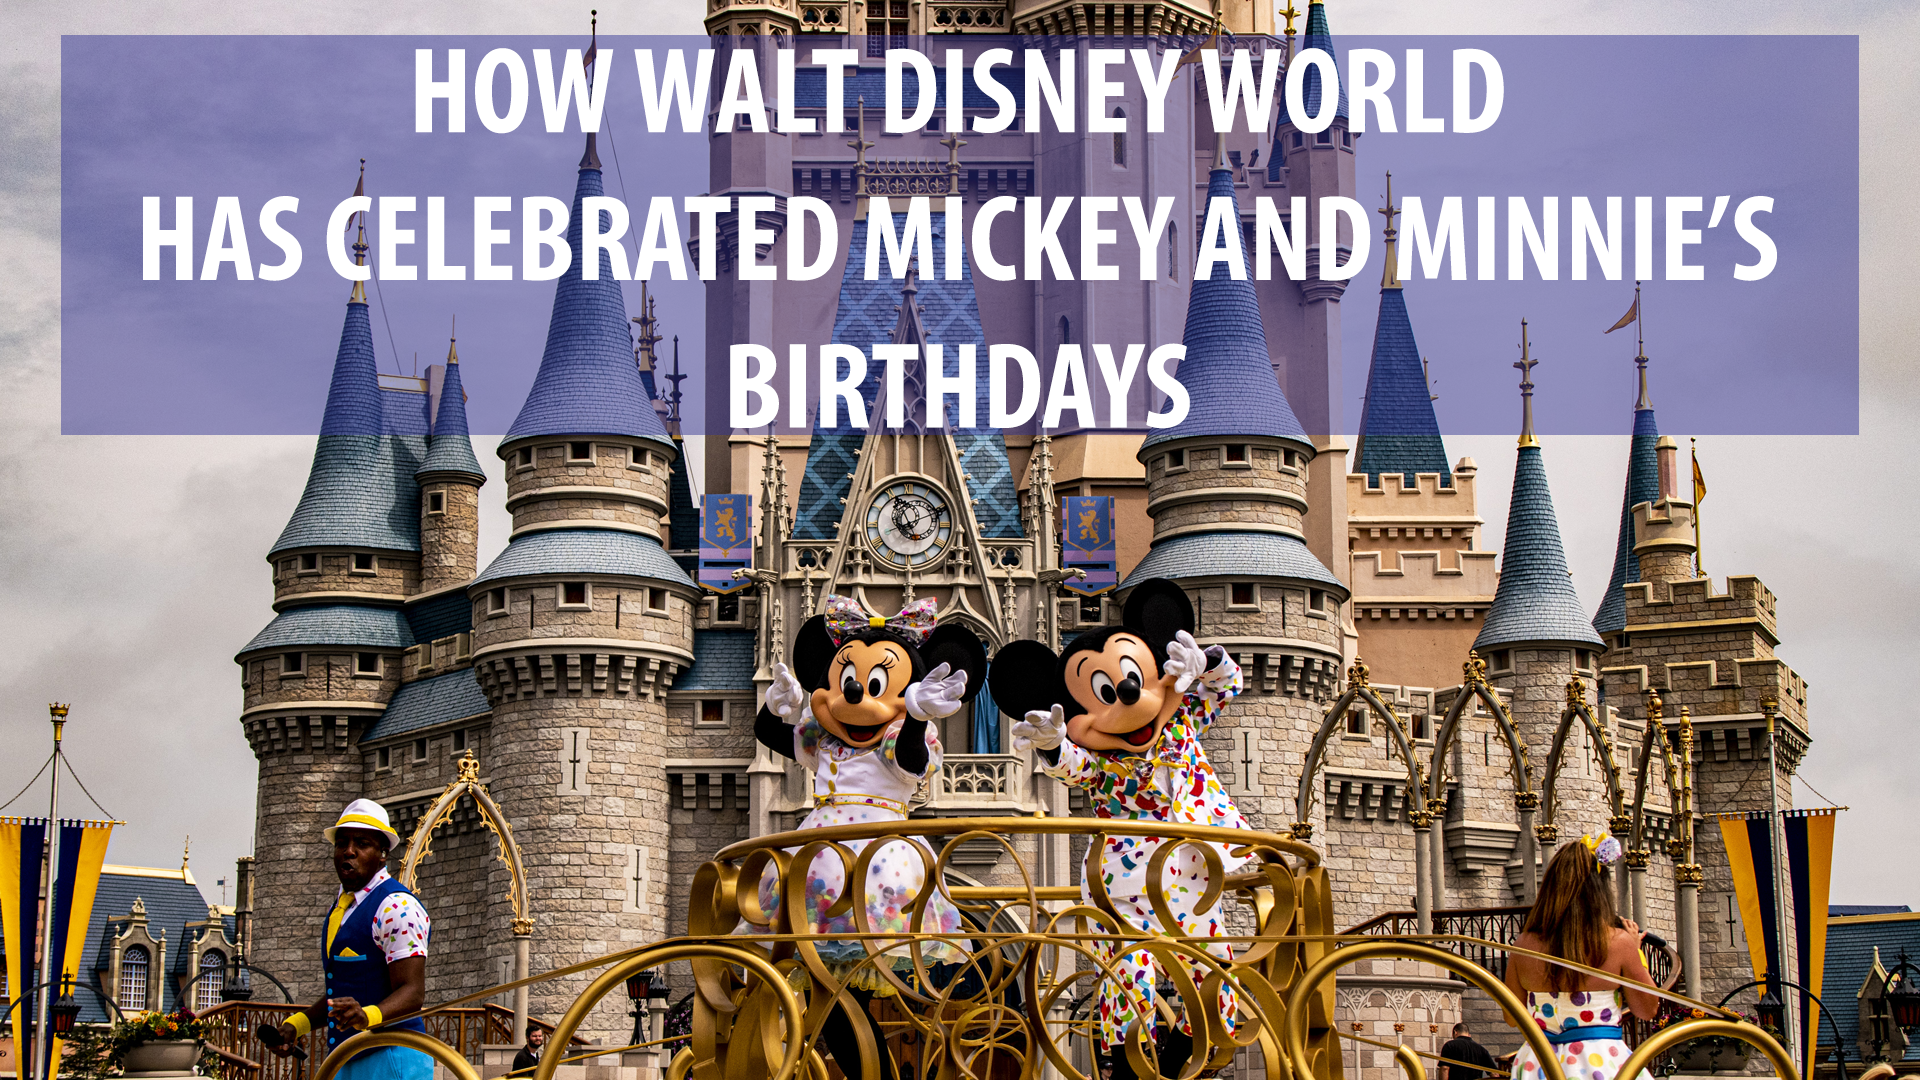 Mickey and Minnie at 93, Walt Disney World at 50 – A Look at How Walt Disney World Has Celebrated Mickey and Minnie’s Birthdays